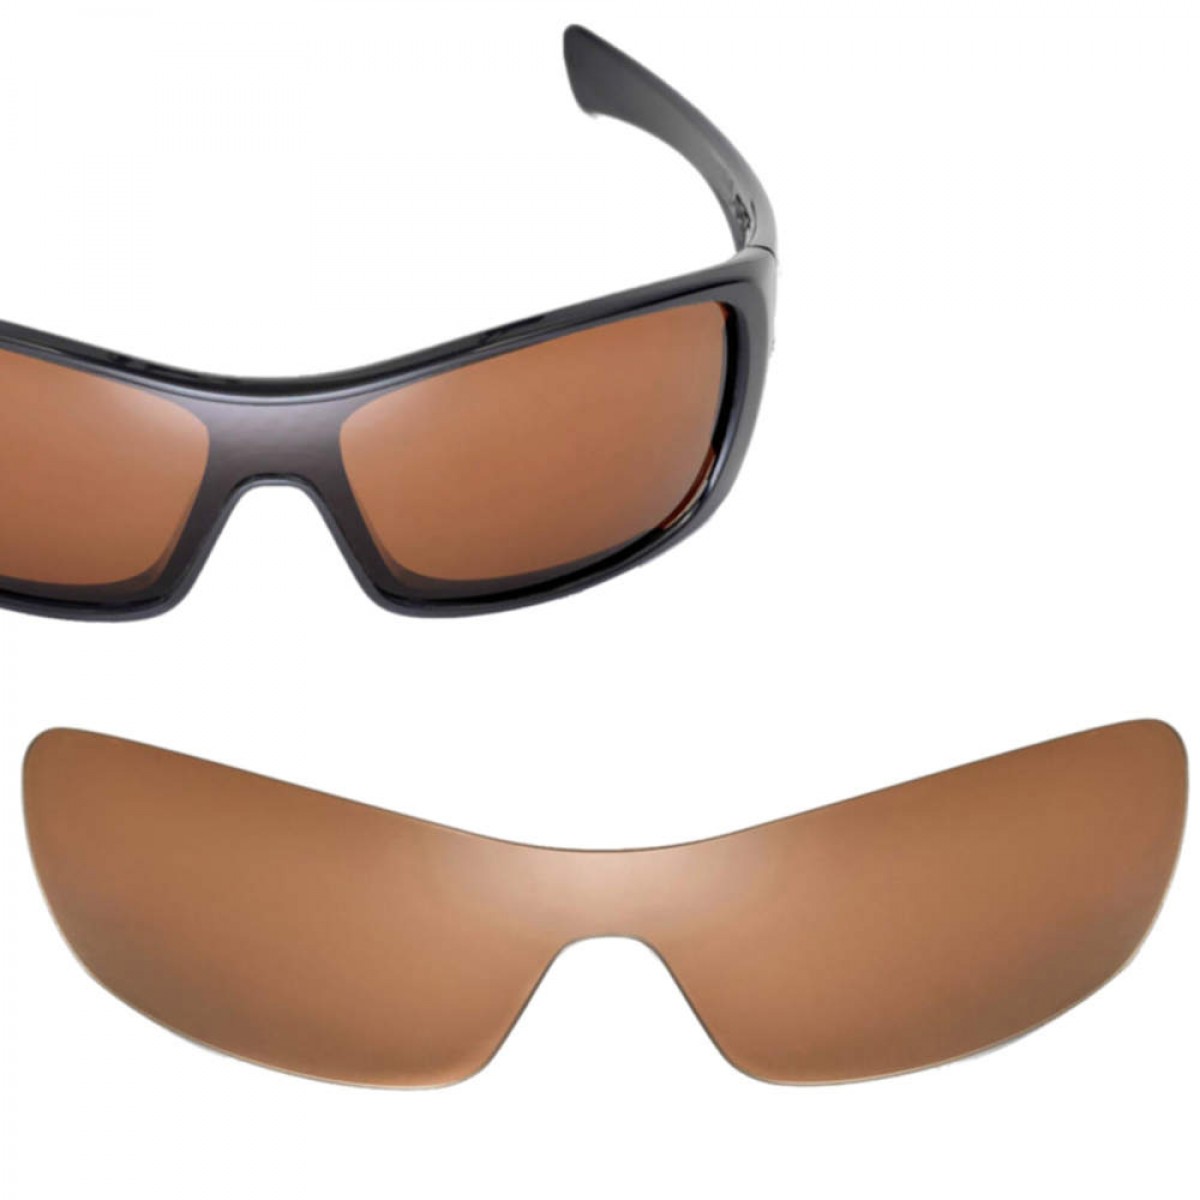 Cofery Lenses Store Replacement Lenses for Oakley Antix Sunglasses